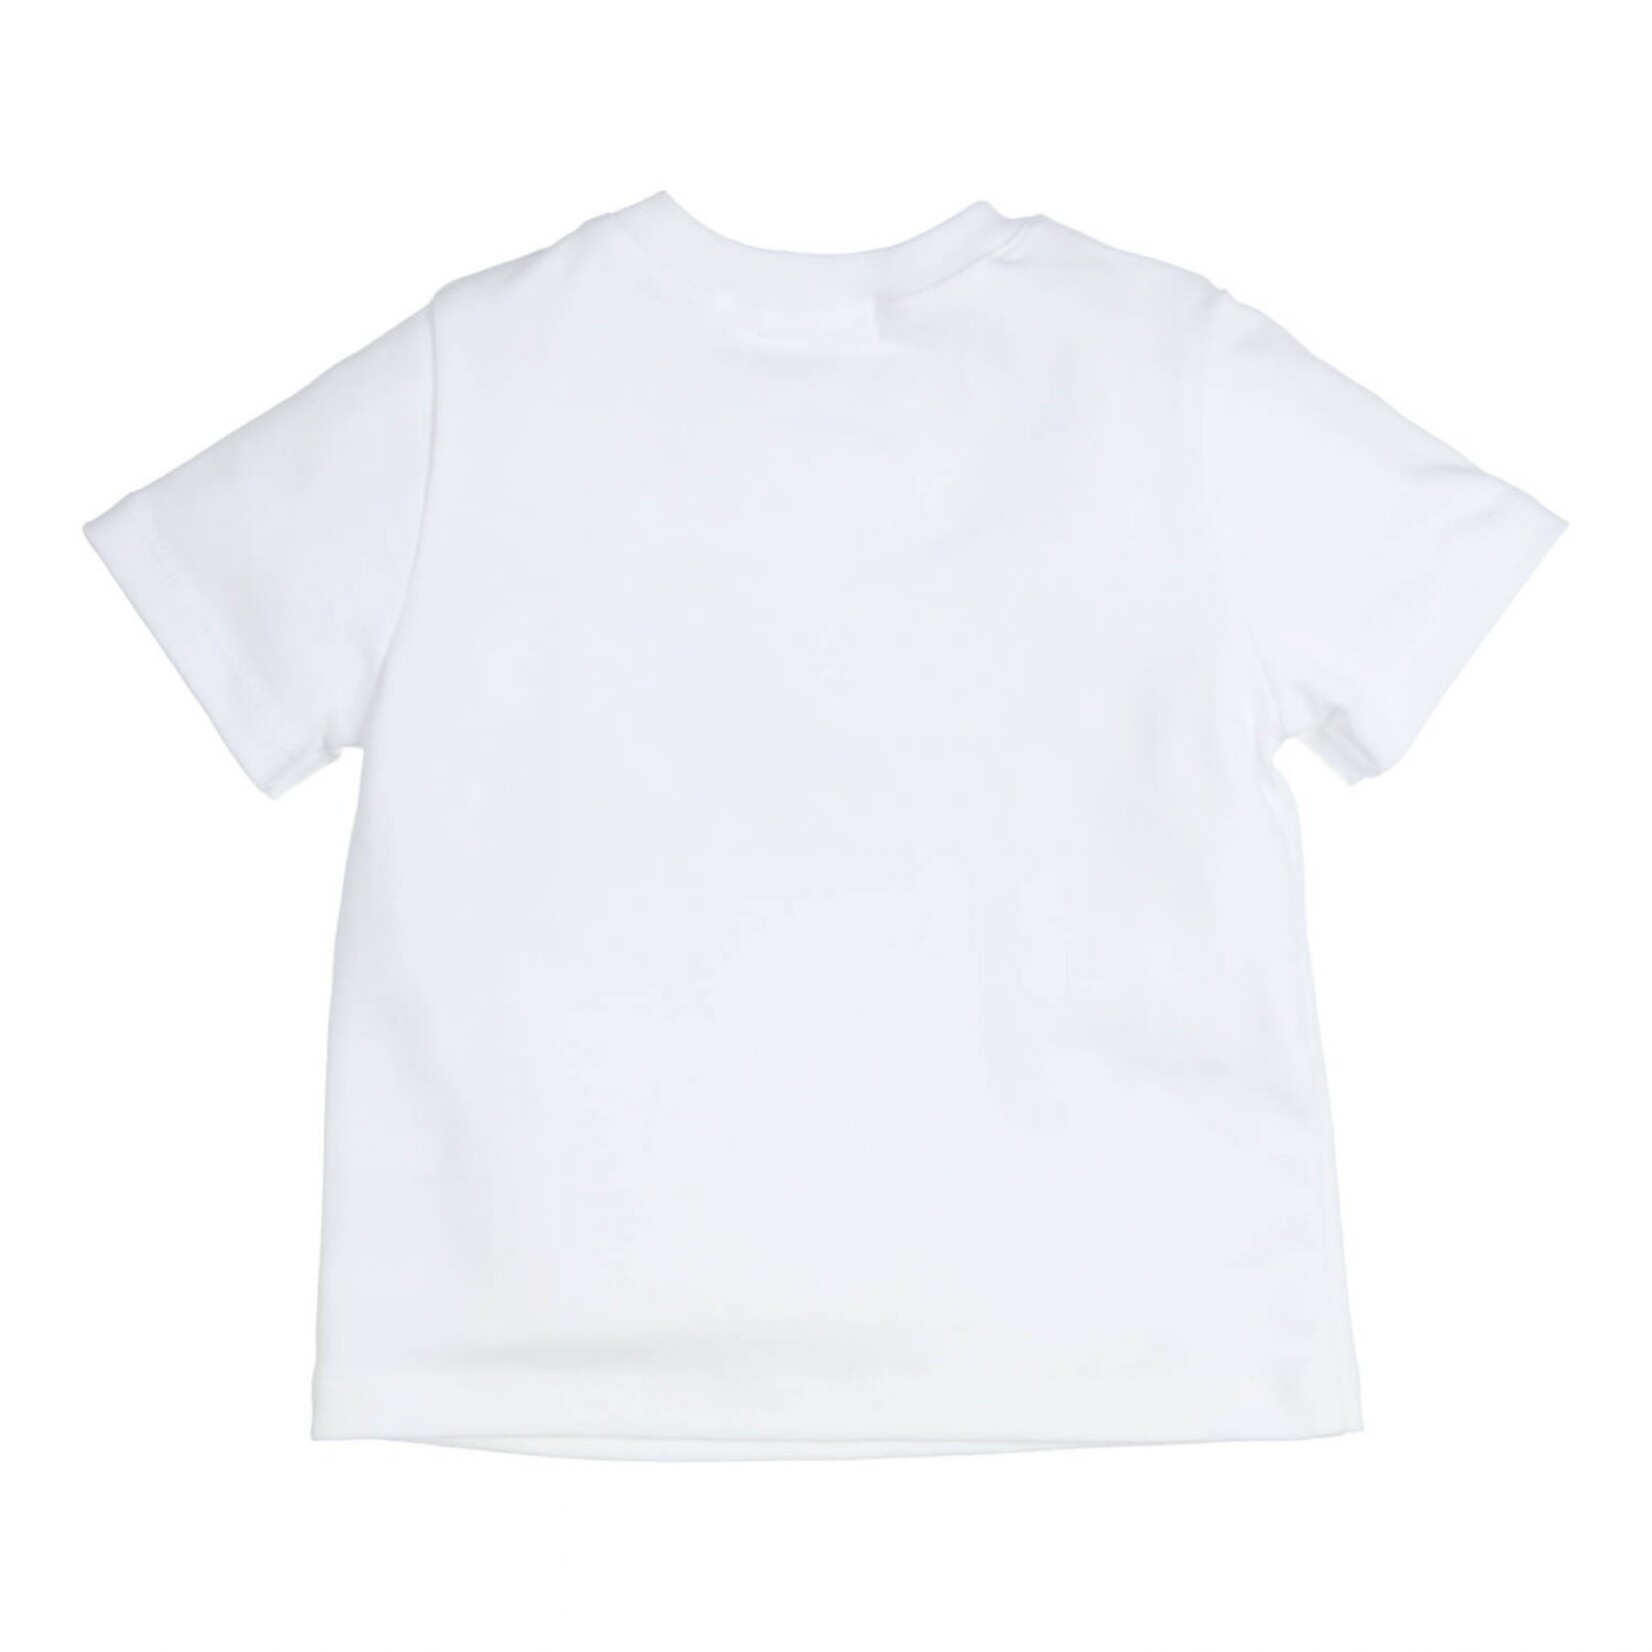 Gymp T-shirt Aerobic_White - Light Blue_24